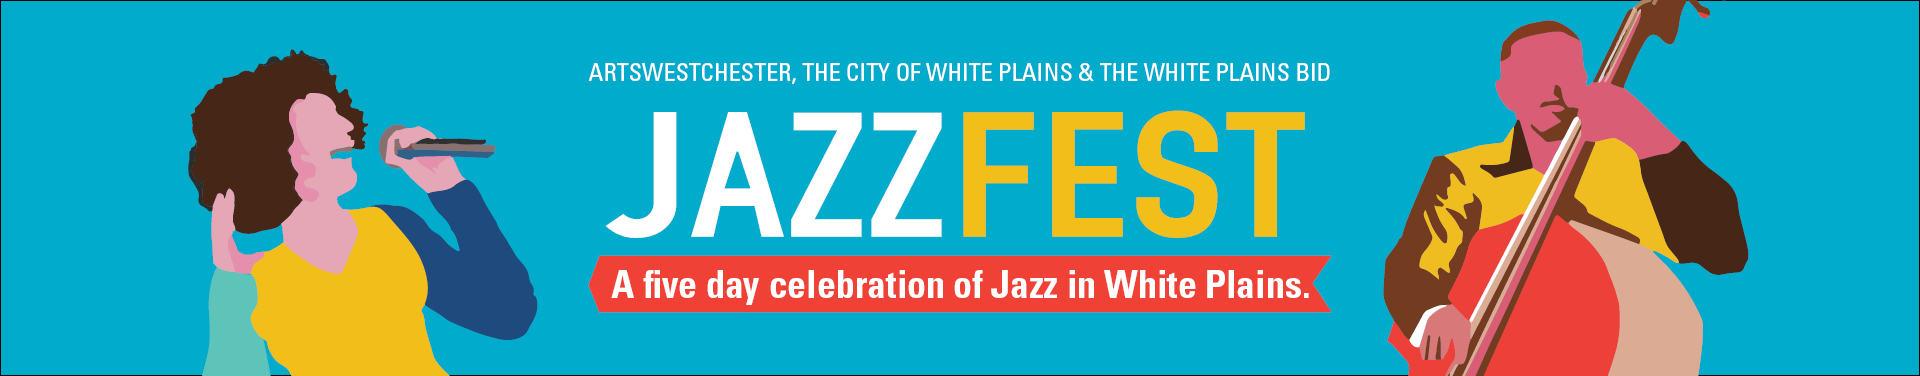 Jazz Festival: 2020 Jazz Fest White Plains | ArtsWestchester